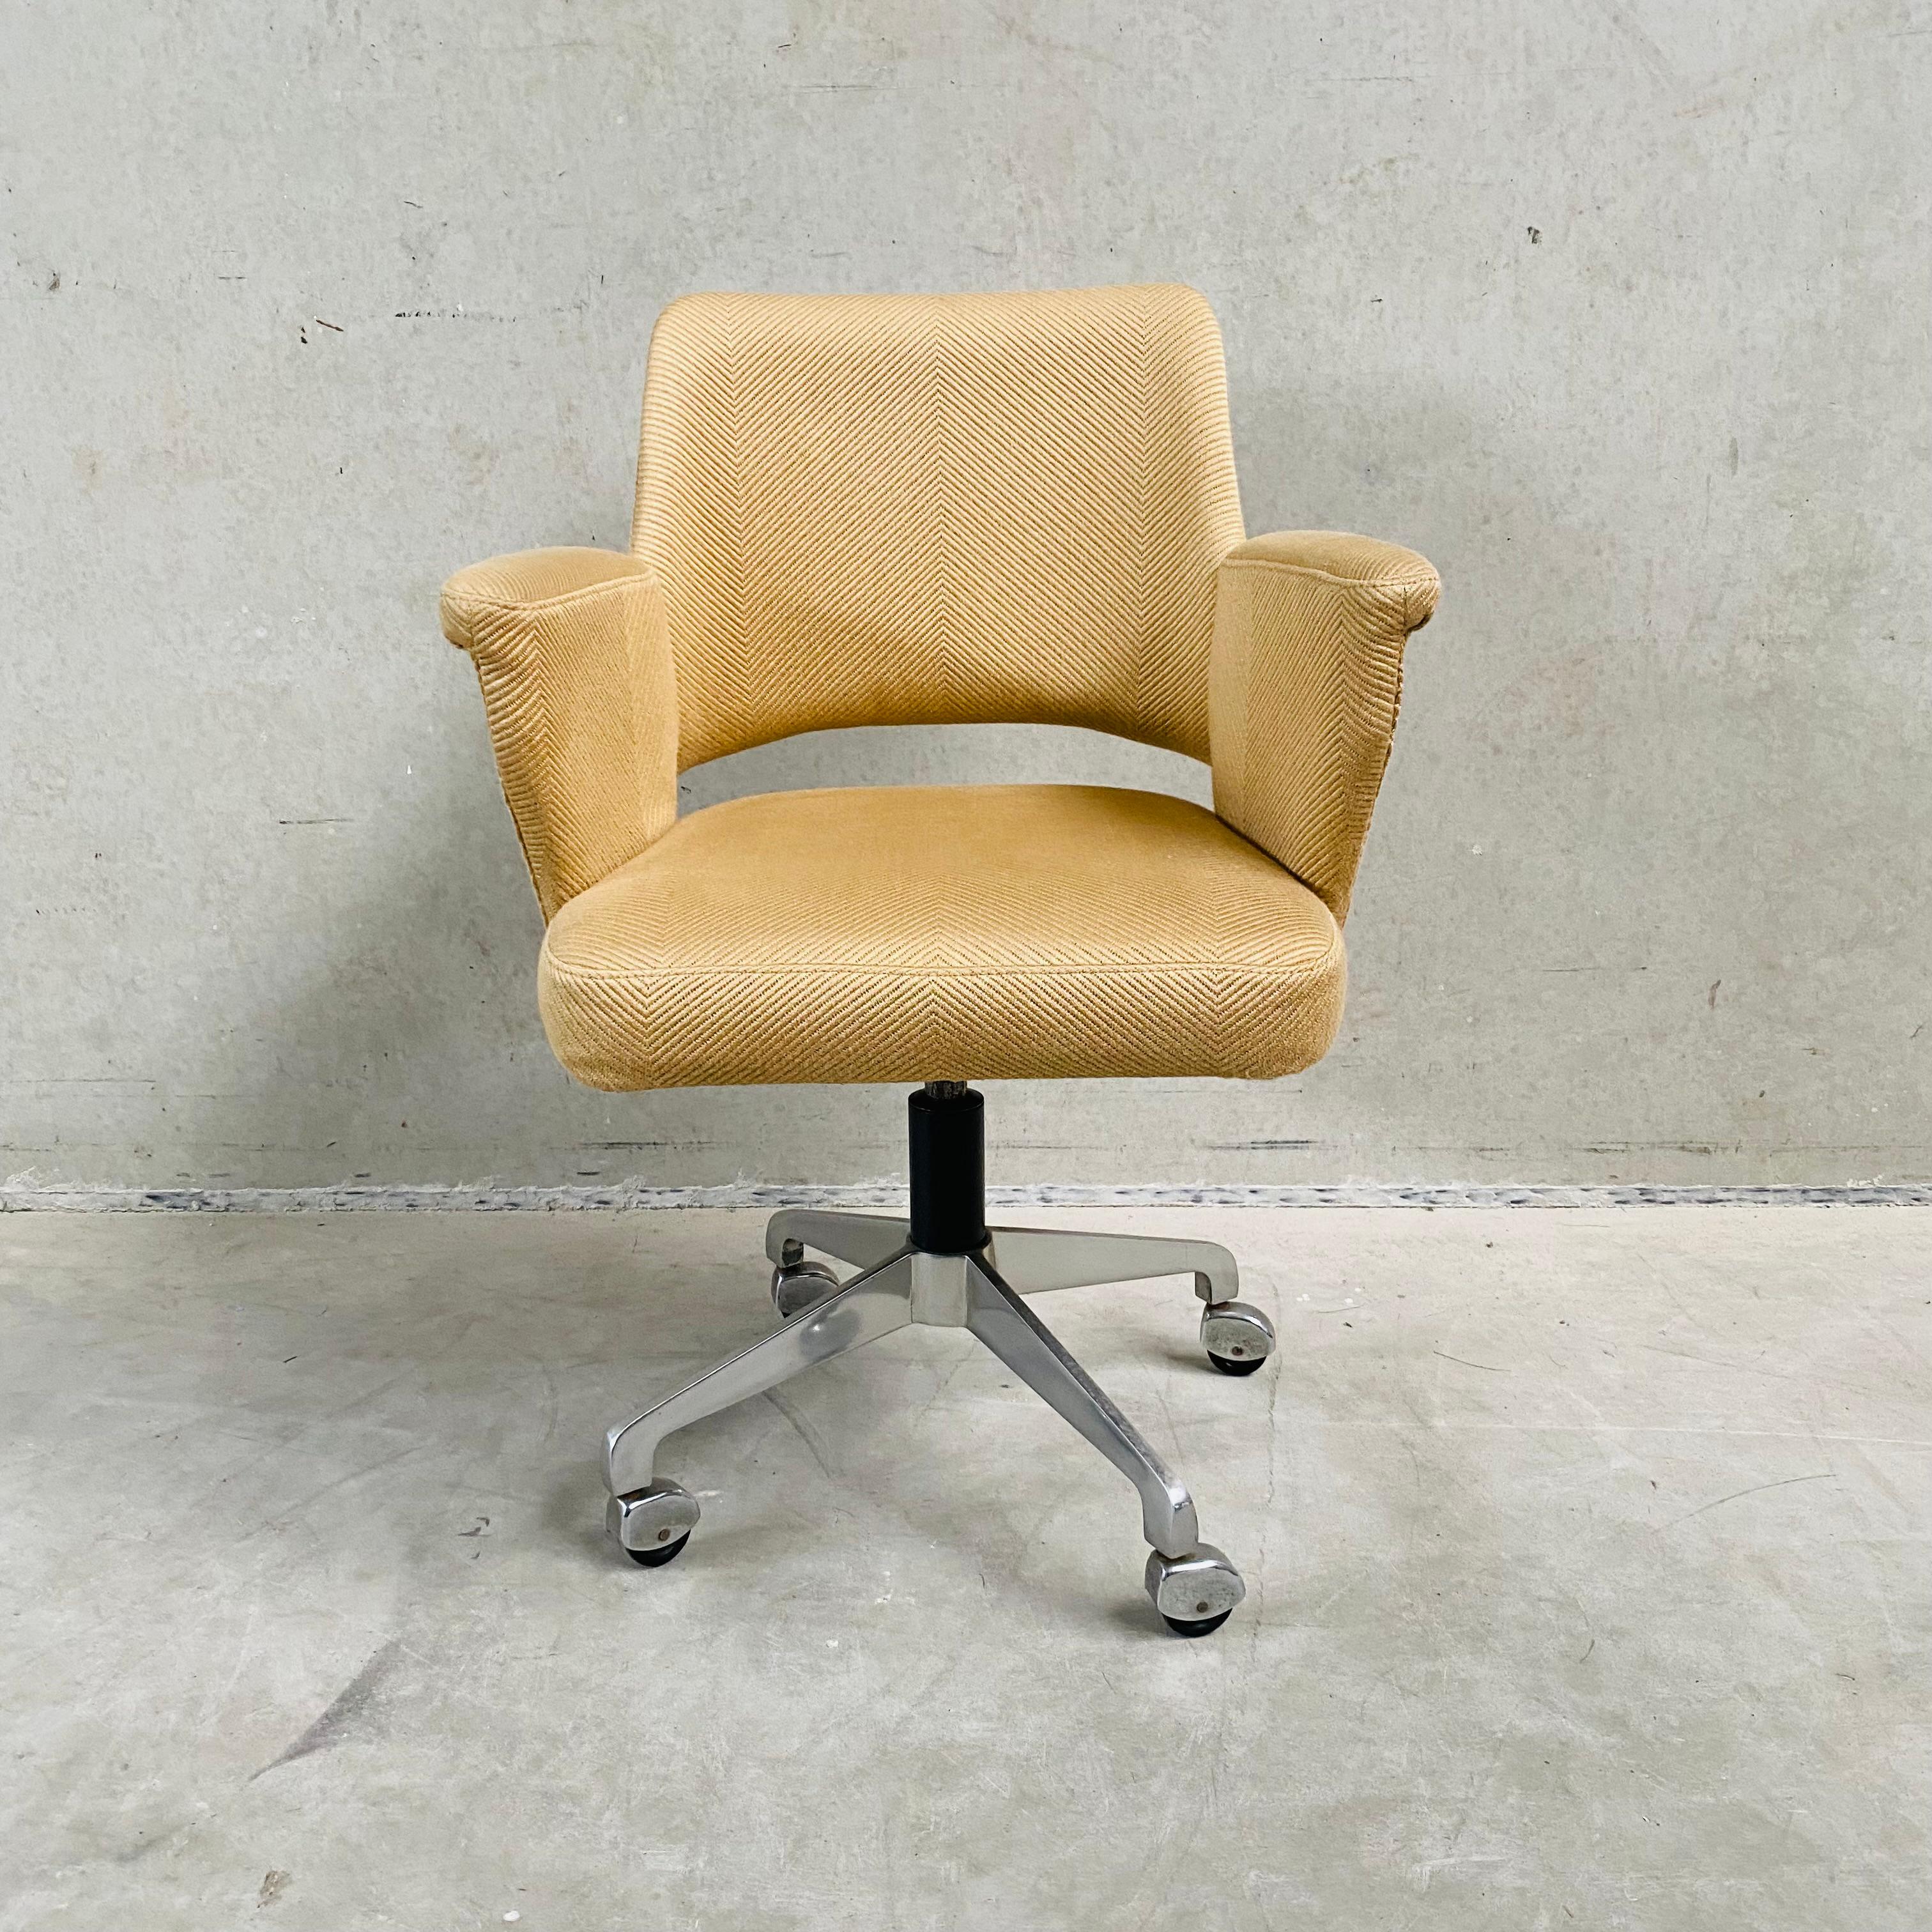 AP Originals Swiffle Desk Chair by Hein Salomonson 1960 For Sale 2